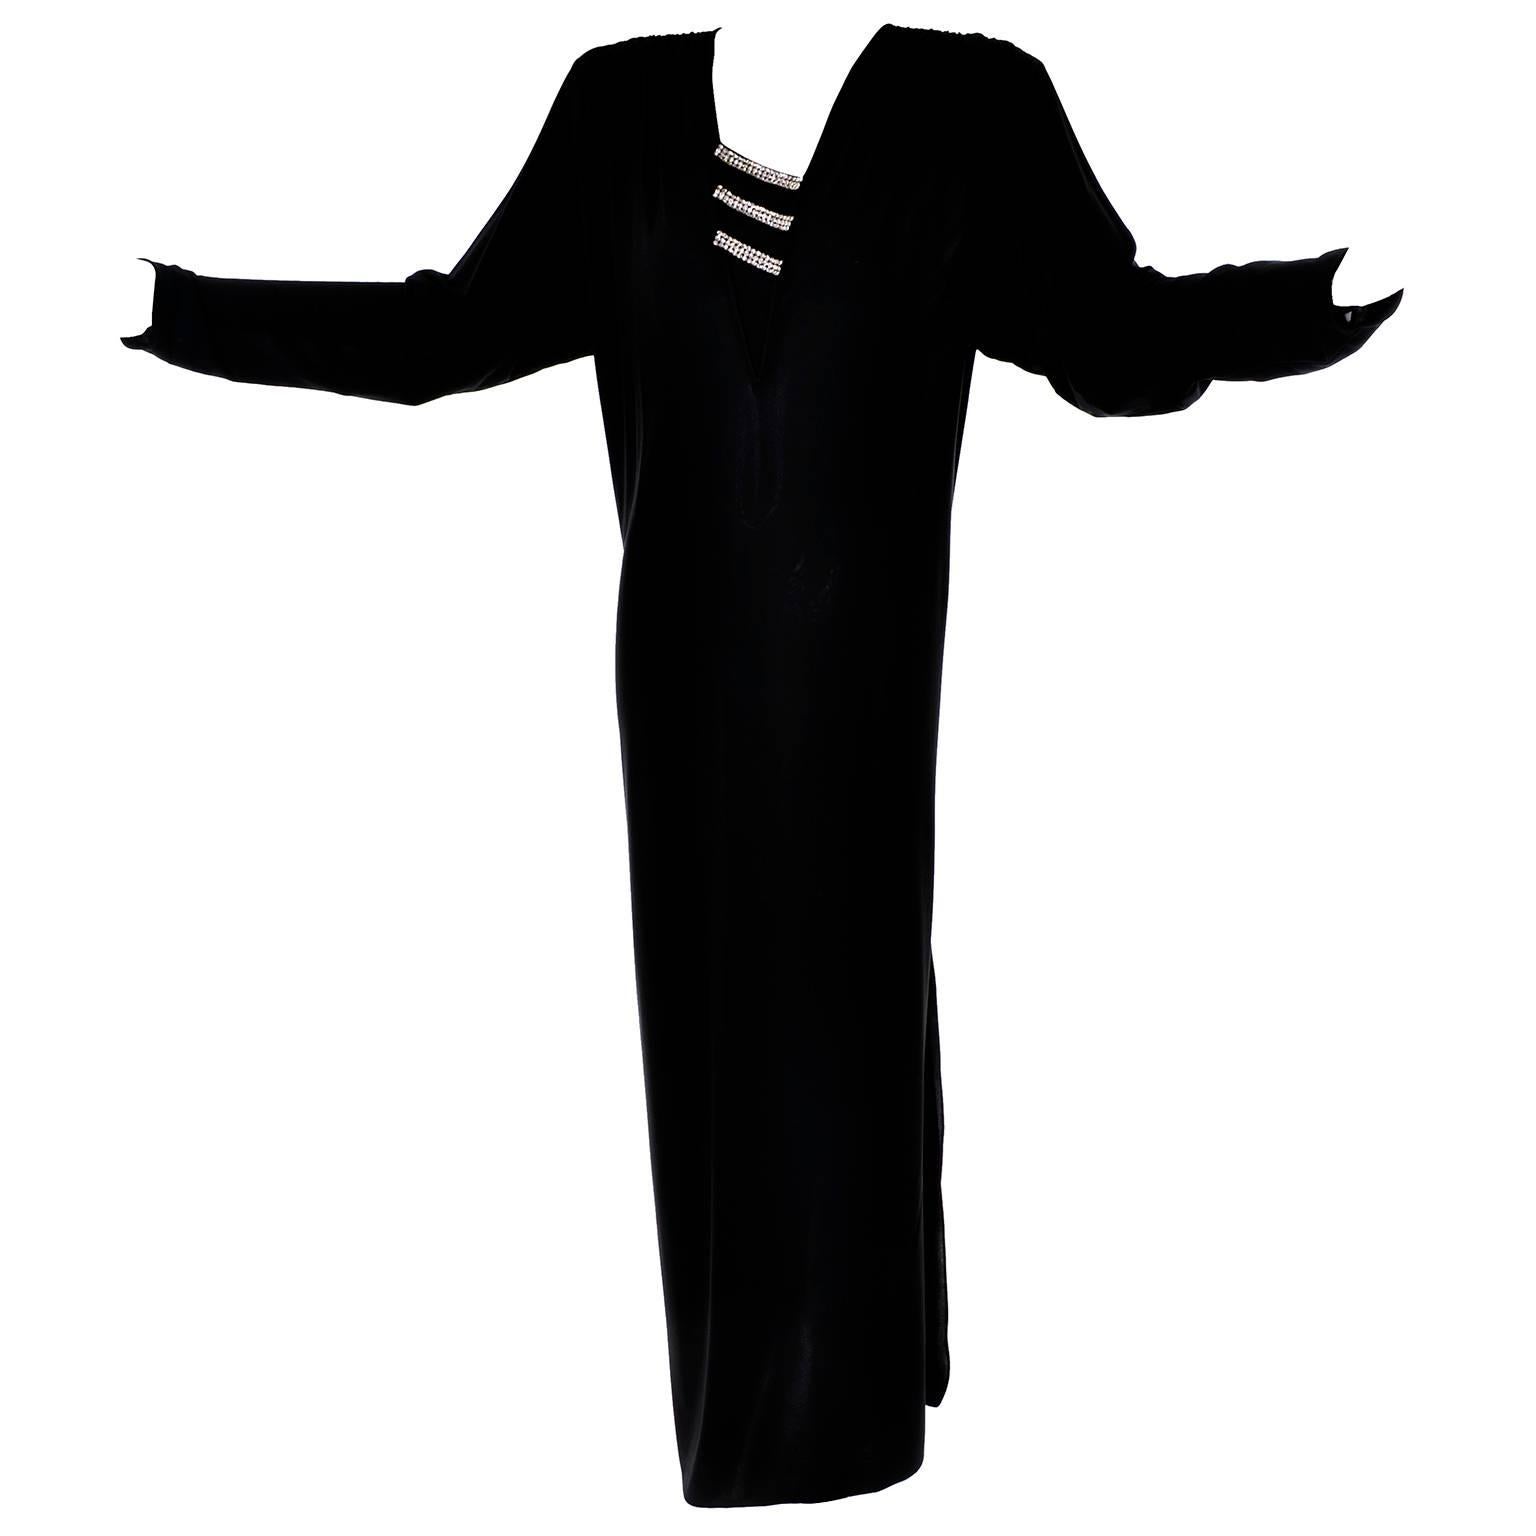 Oscar de la Renta Black Vintage Dress or Hostess Gown Rhinestones